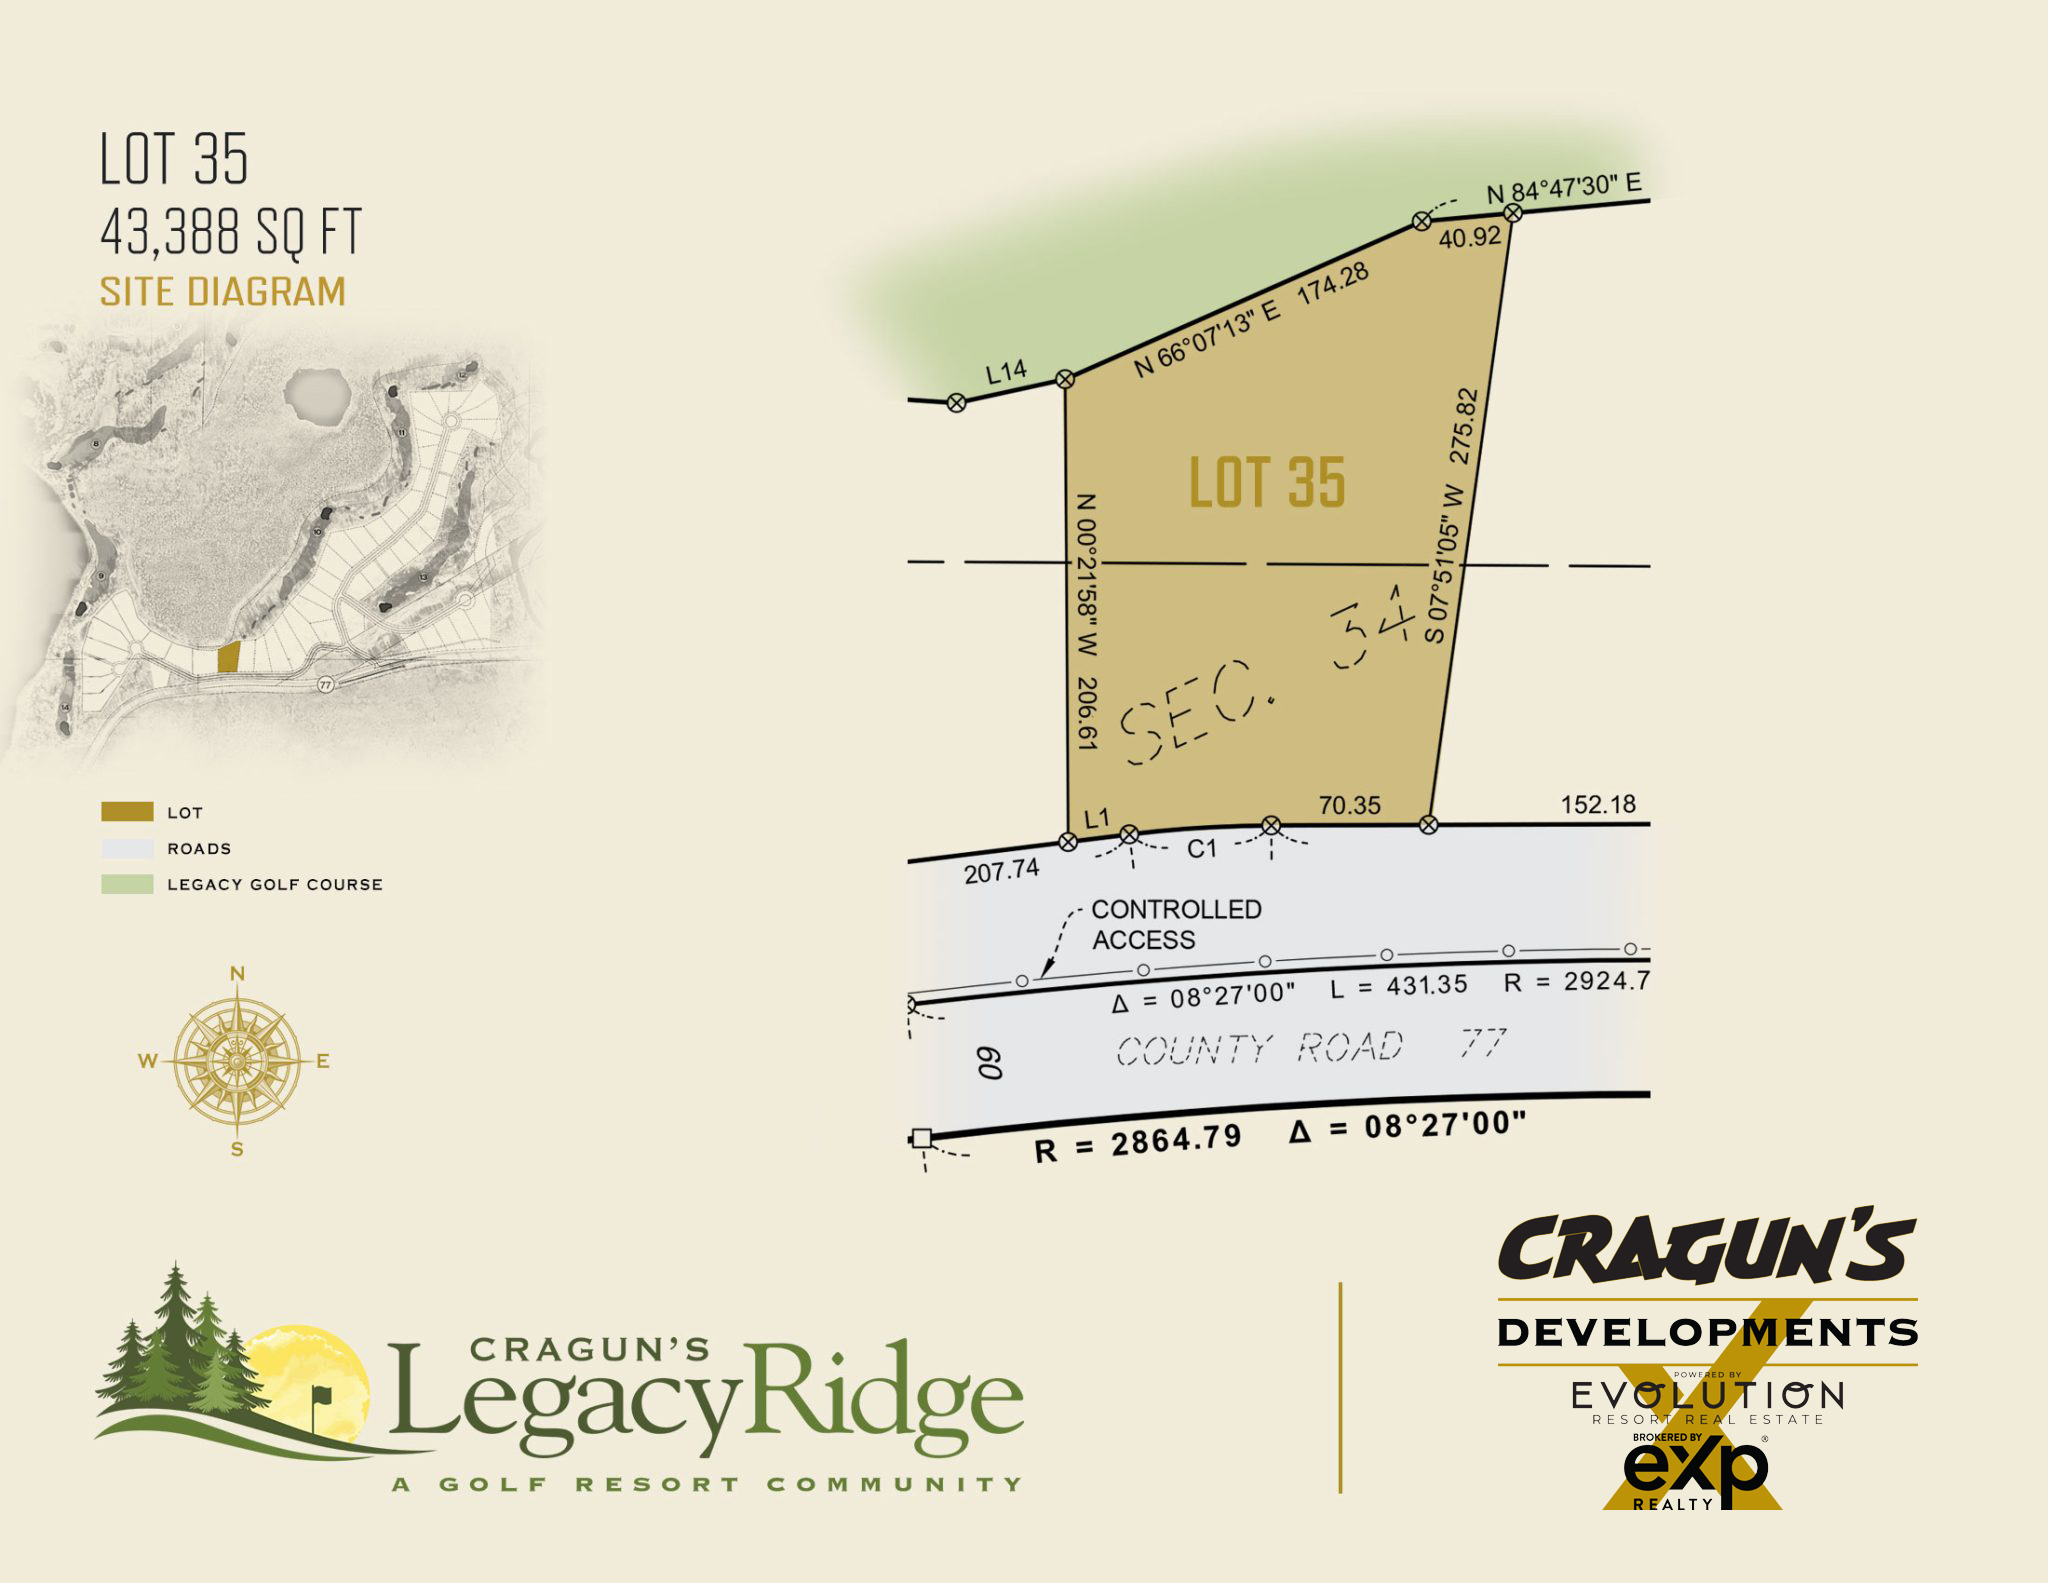 Legacy Ridge Lot 35 at Cragun's Developments in Brainerd, MN